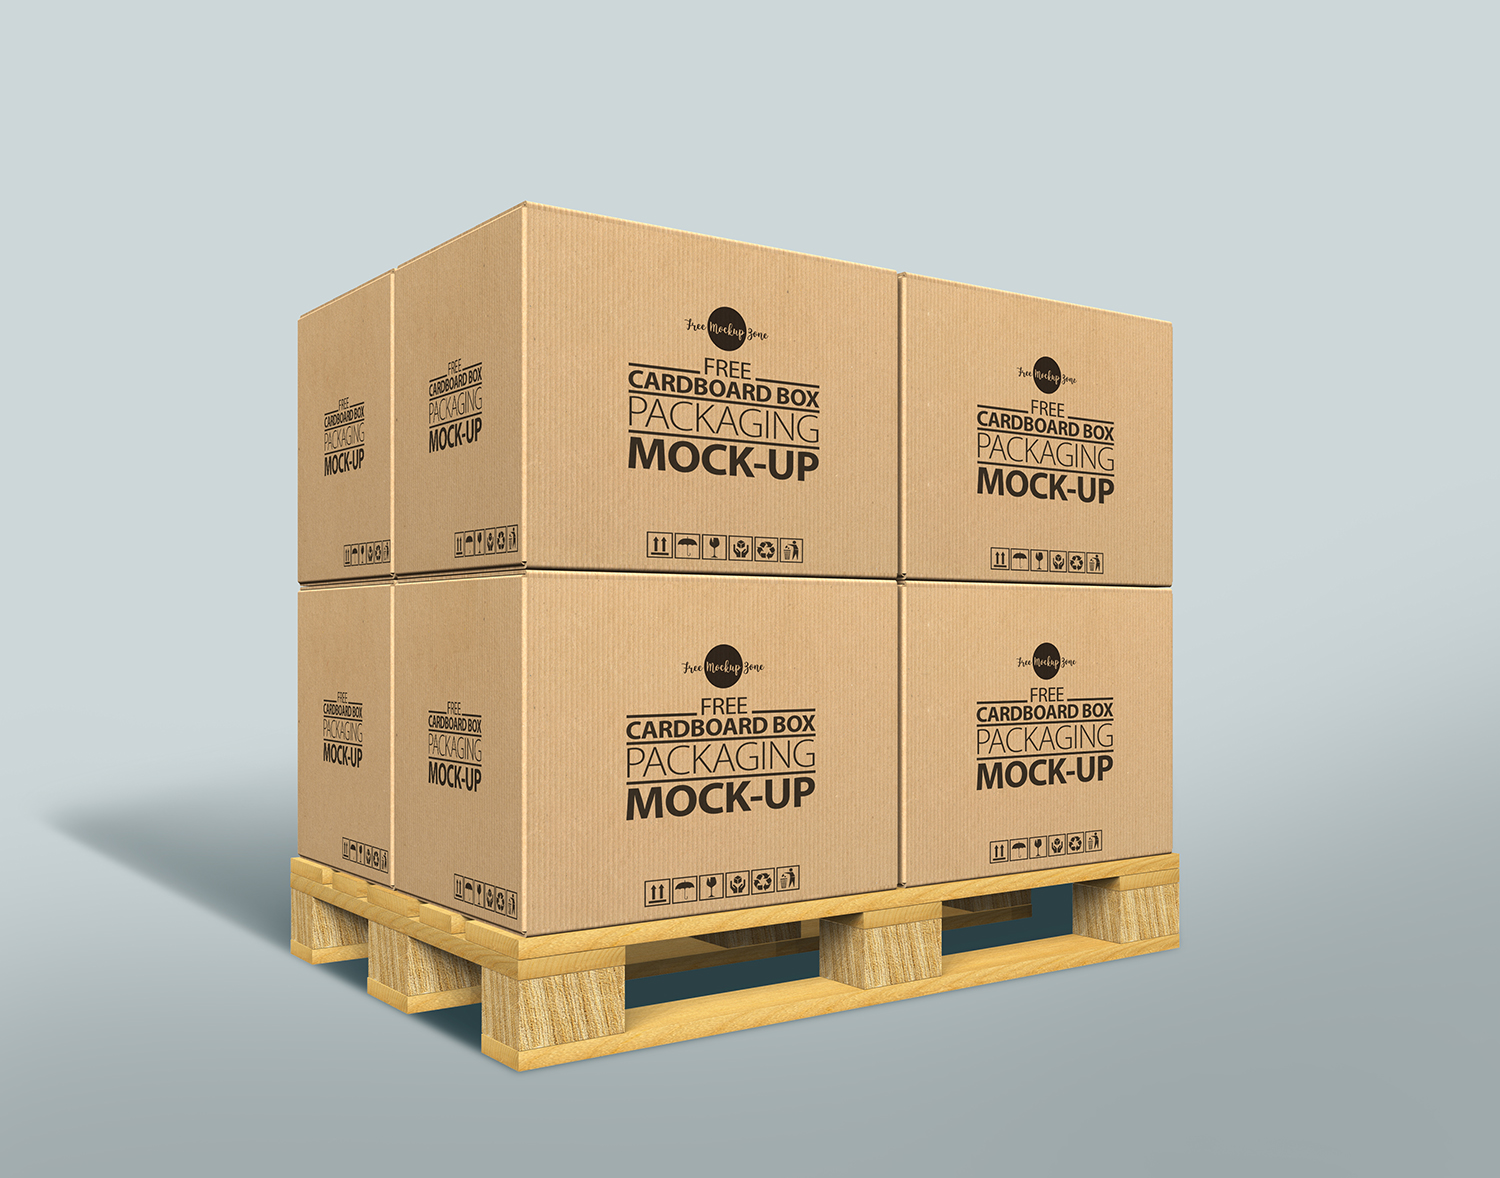 free-cardboard-box-packaging-mock-up-psd-2